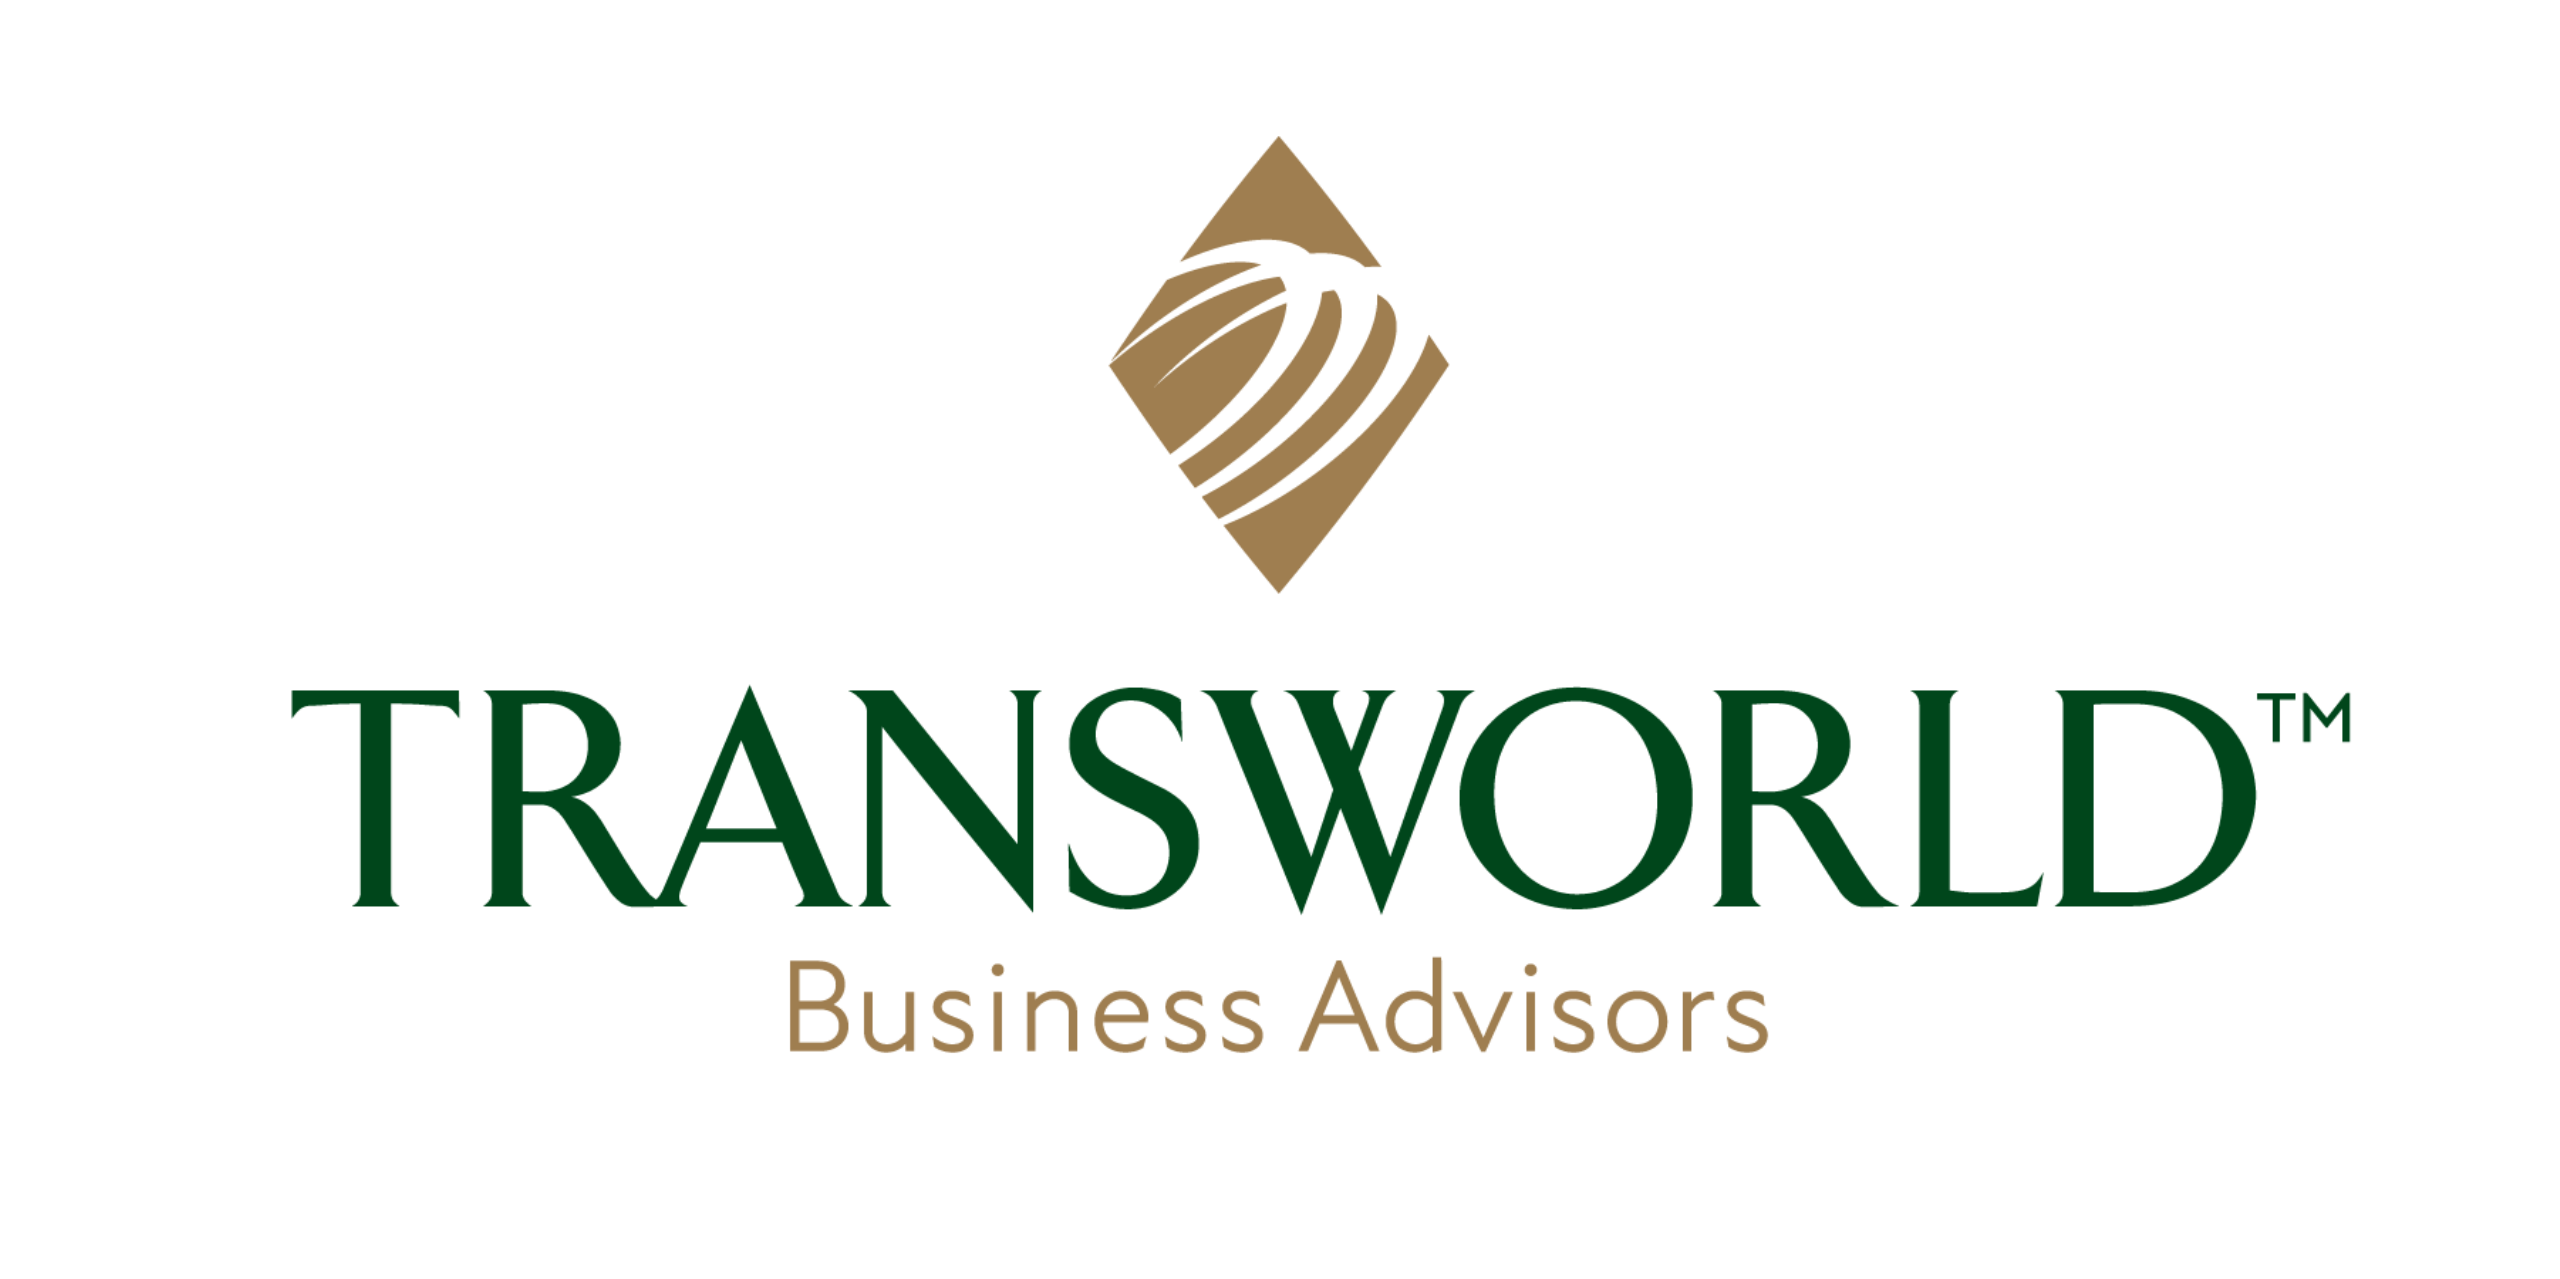 Jim DeShayes - Transworld Business Advisors Logo